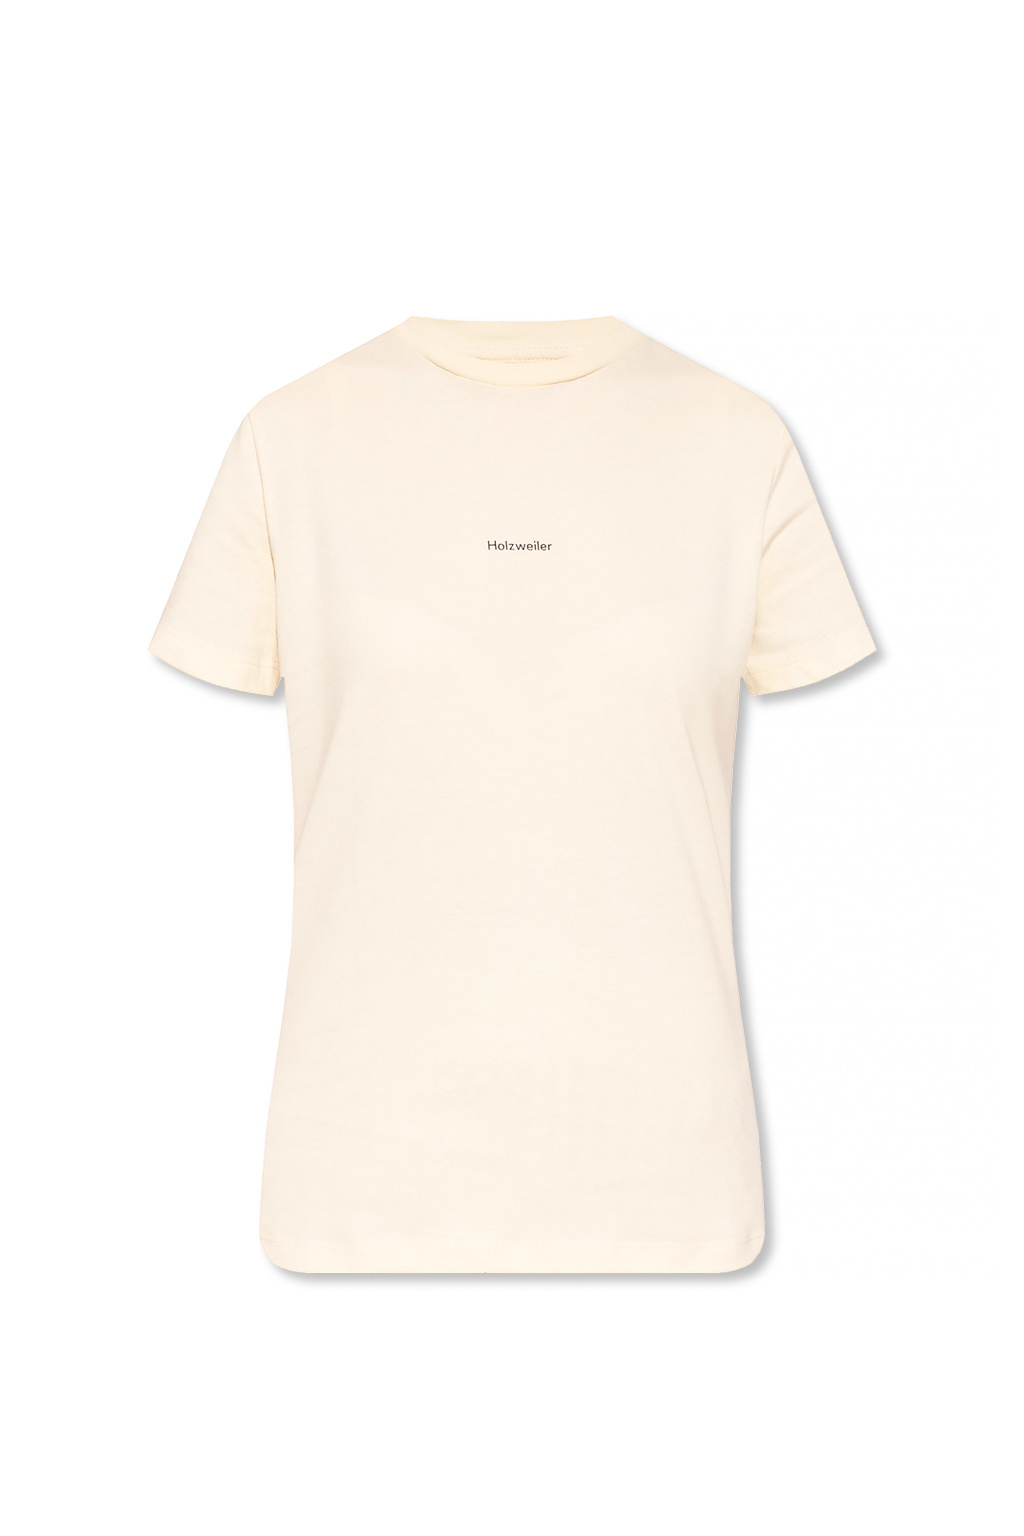 Holzweiler ‘Suzana’ T-shirt